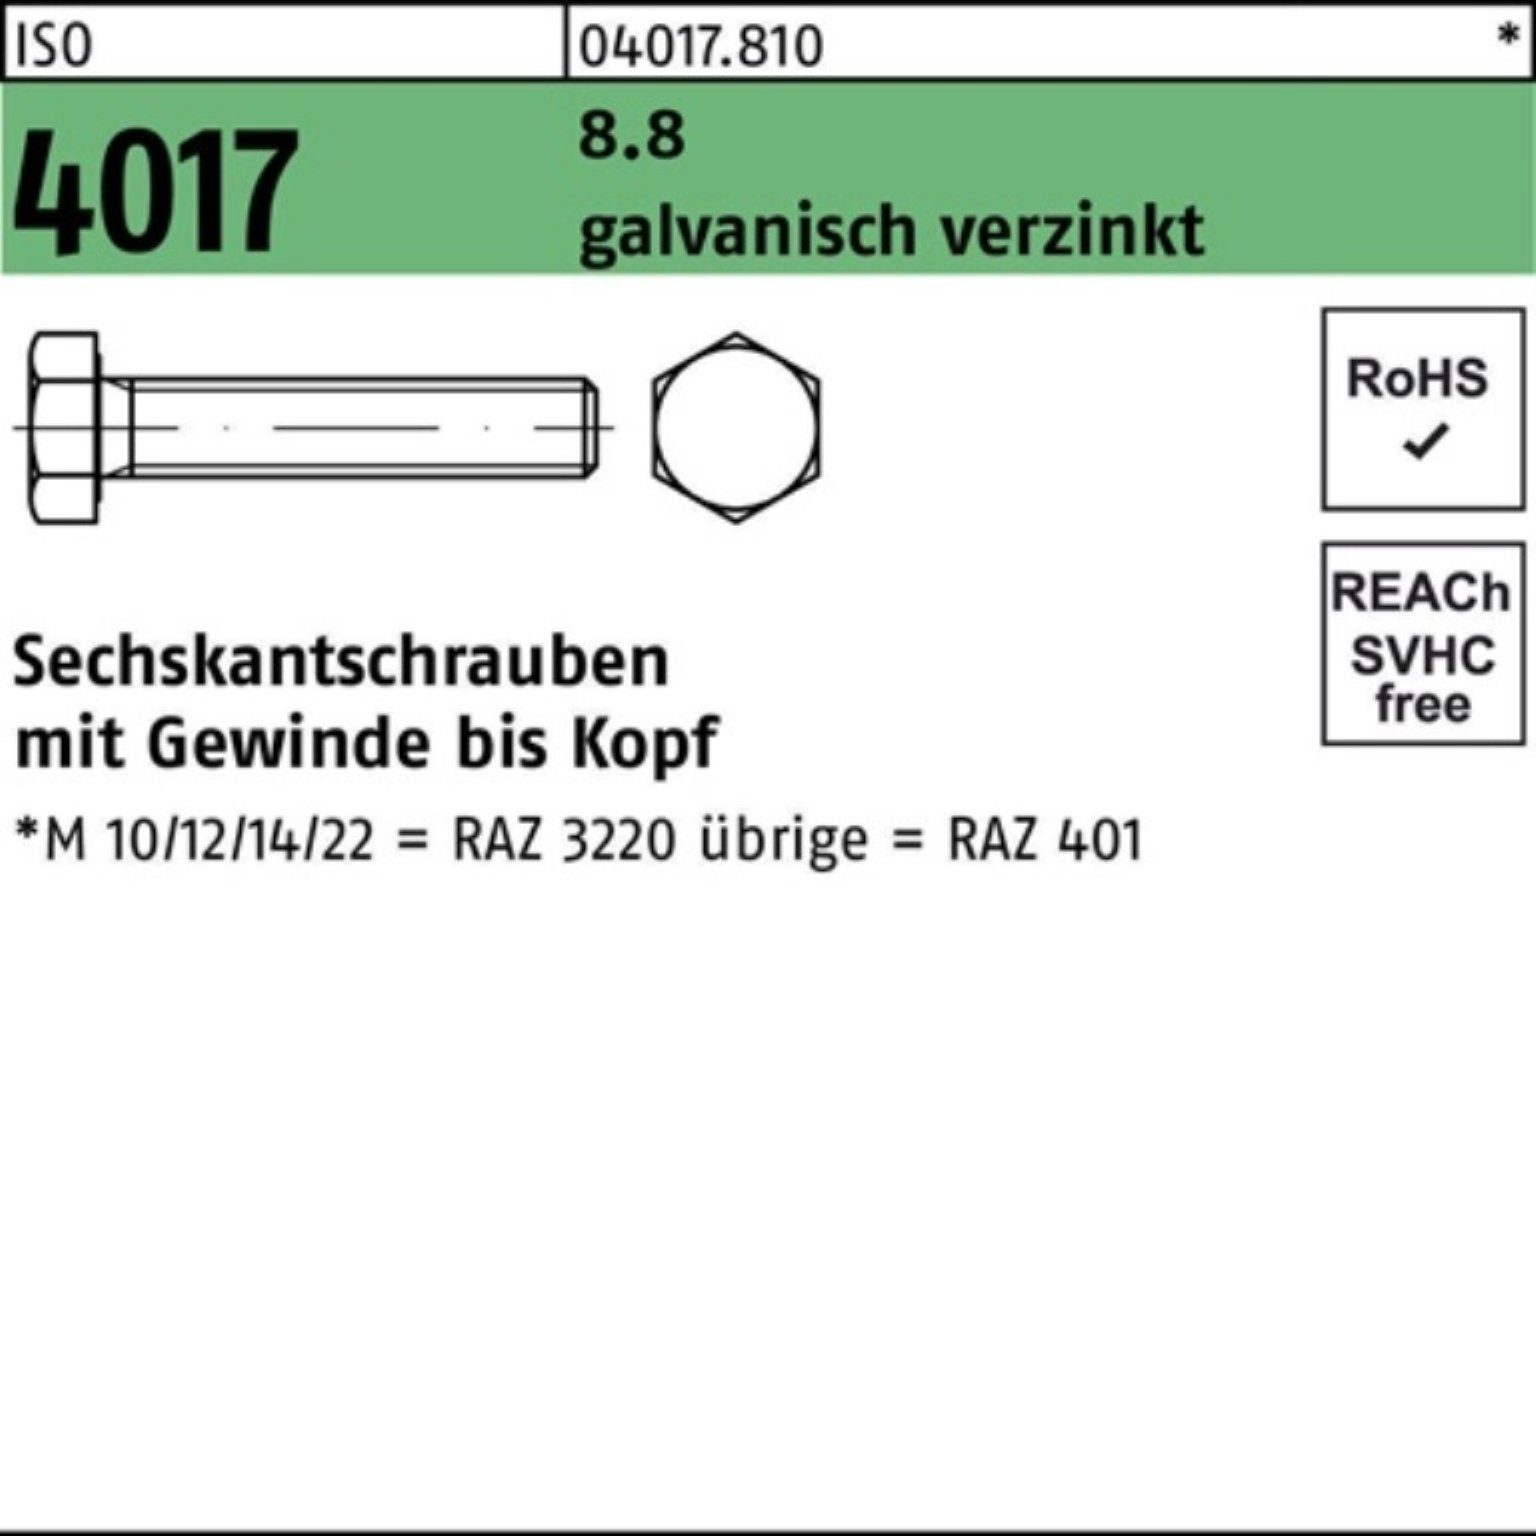 4017 500 VG ISO Bufab M3x Pack St 12 Sechskantschraube 8.8 galv.verz. 500er Sechskantschraube